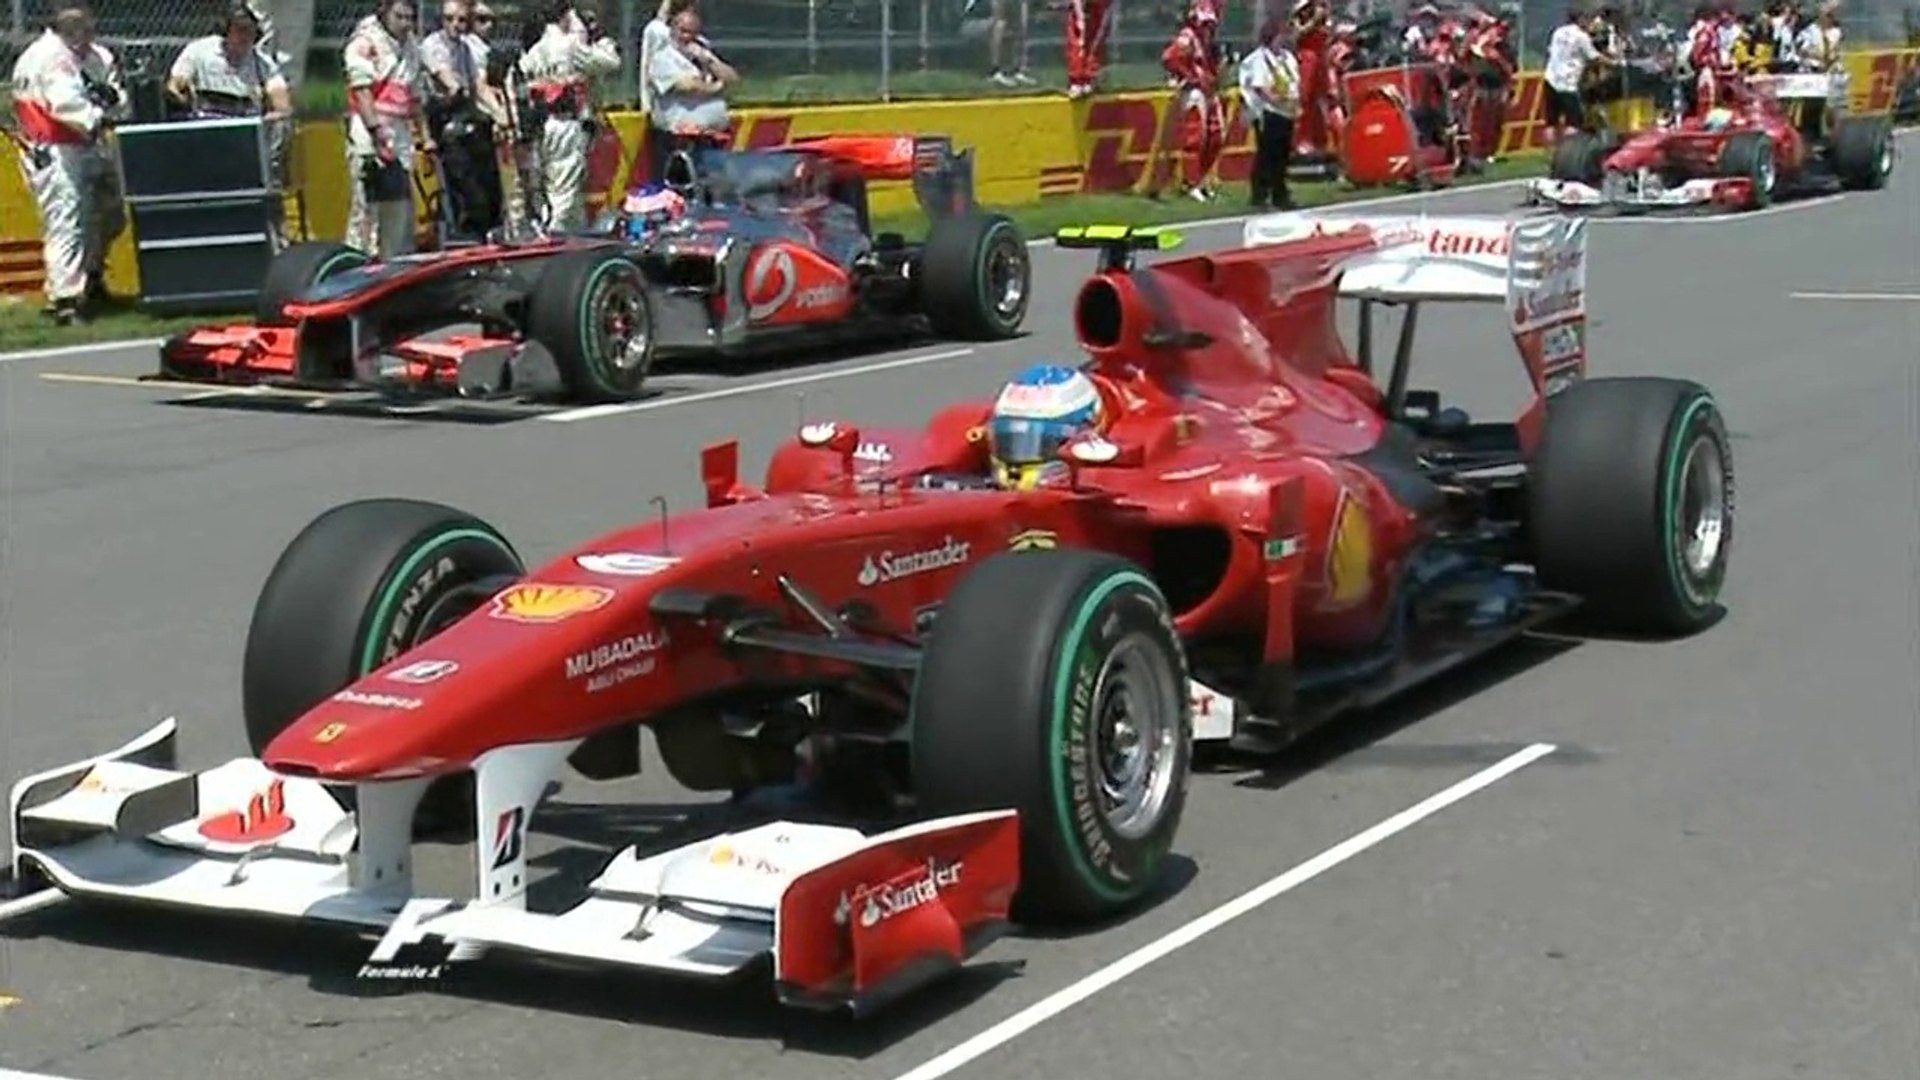 F1 - Round 10 2010 - Race - Part 1